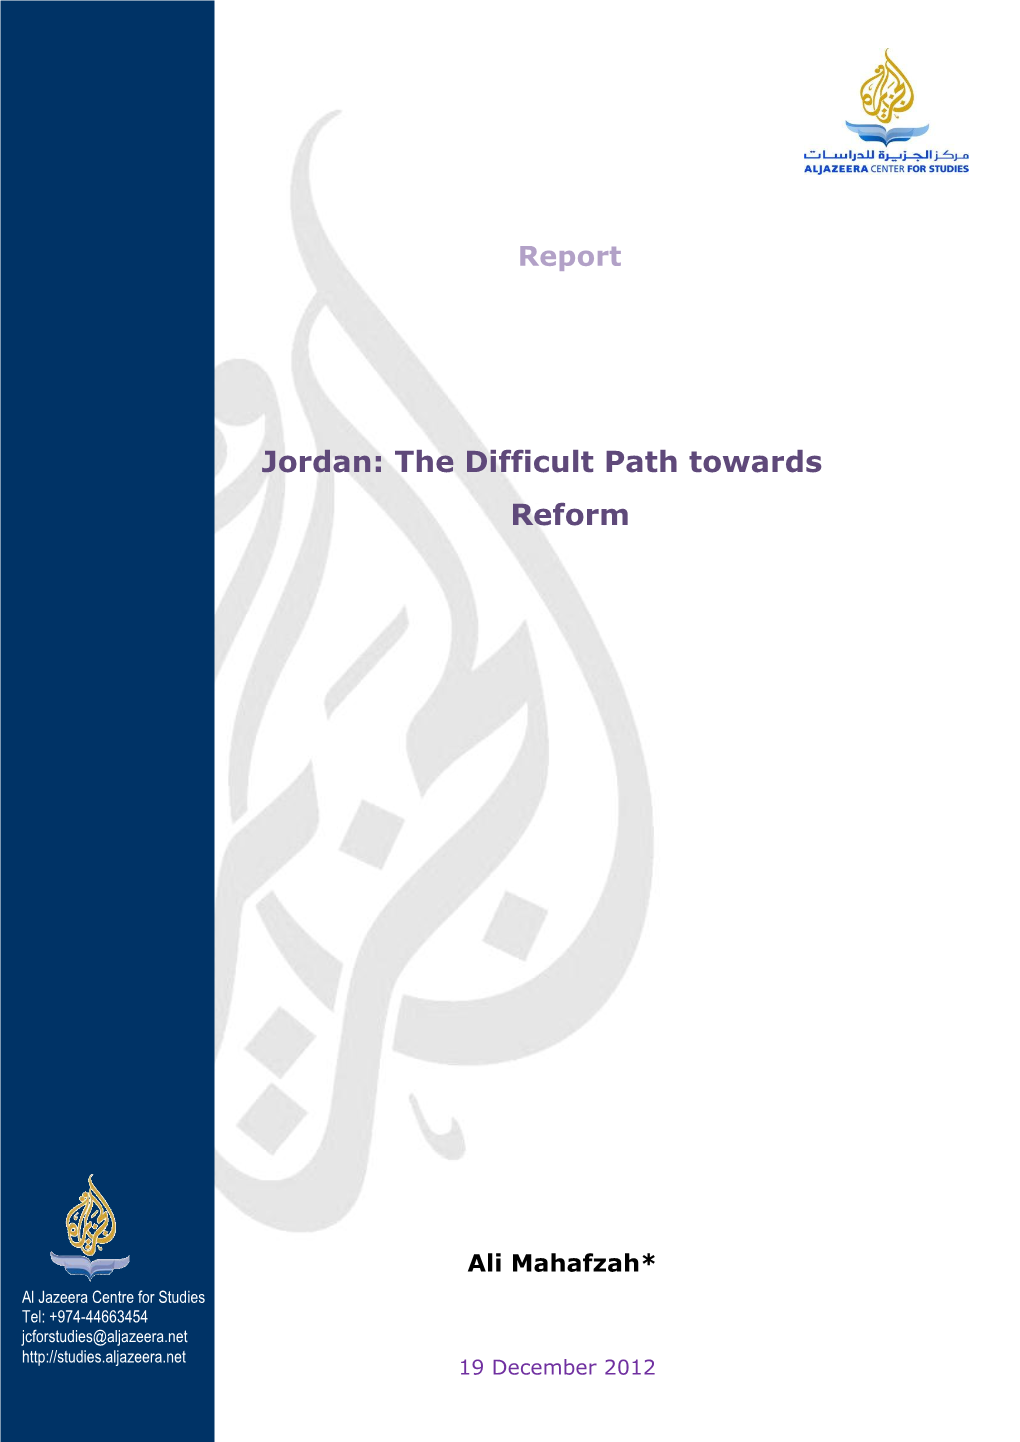 Jordan: the Difficult Path Towards Reform